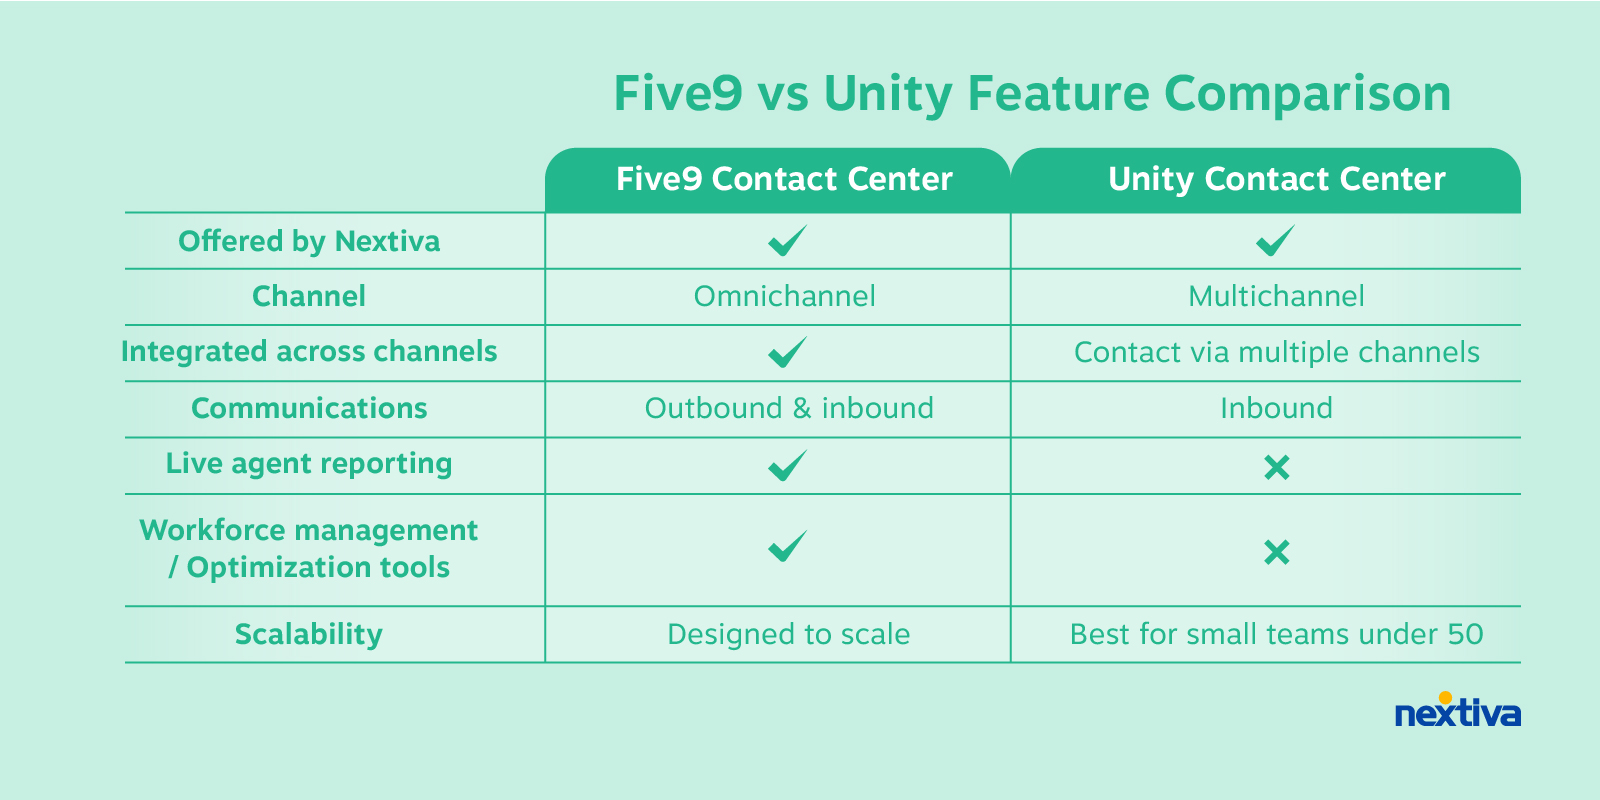 Nextiva Contact Center vs. Unity Contact Center: Comparison